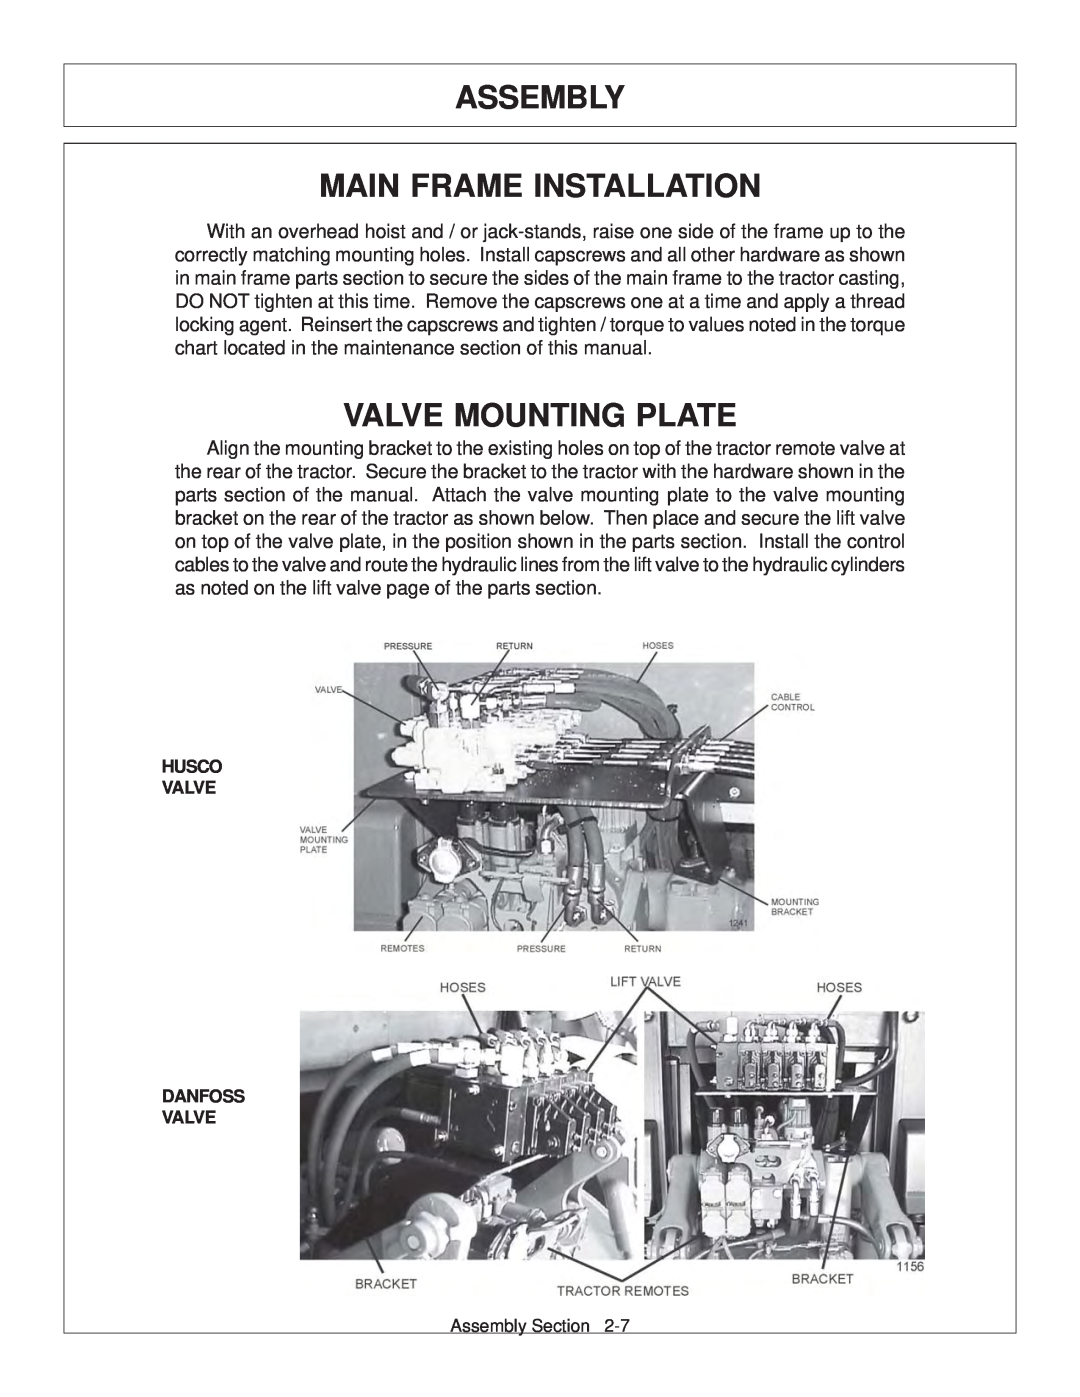 Tiger JD 62-6420 manual Assembly Main Frame Installation, Valve Mounting Plate, Husco Valve Danfoss Valve 